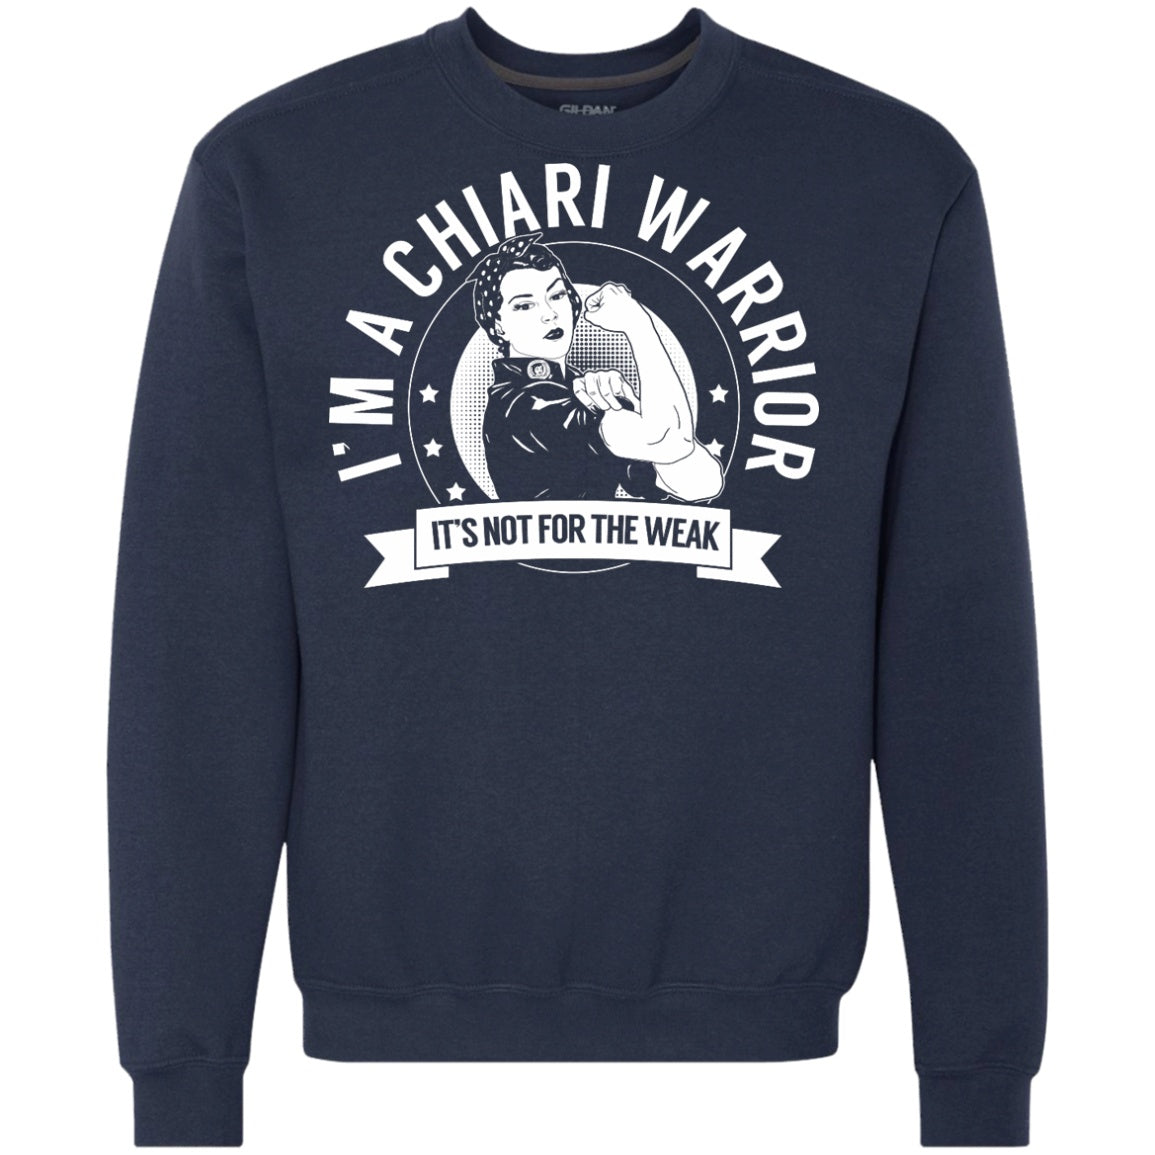 Chiari Warrior Not for the Weak Crewneck Sweatshirt 9 oz. - The Unchargeables